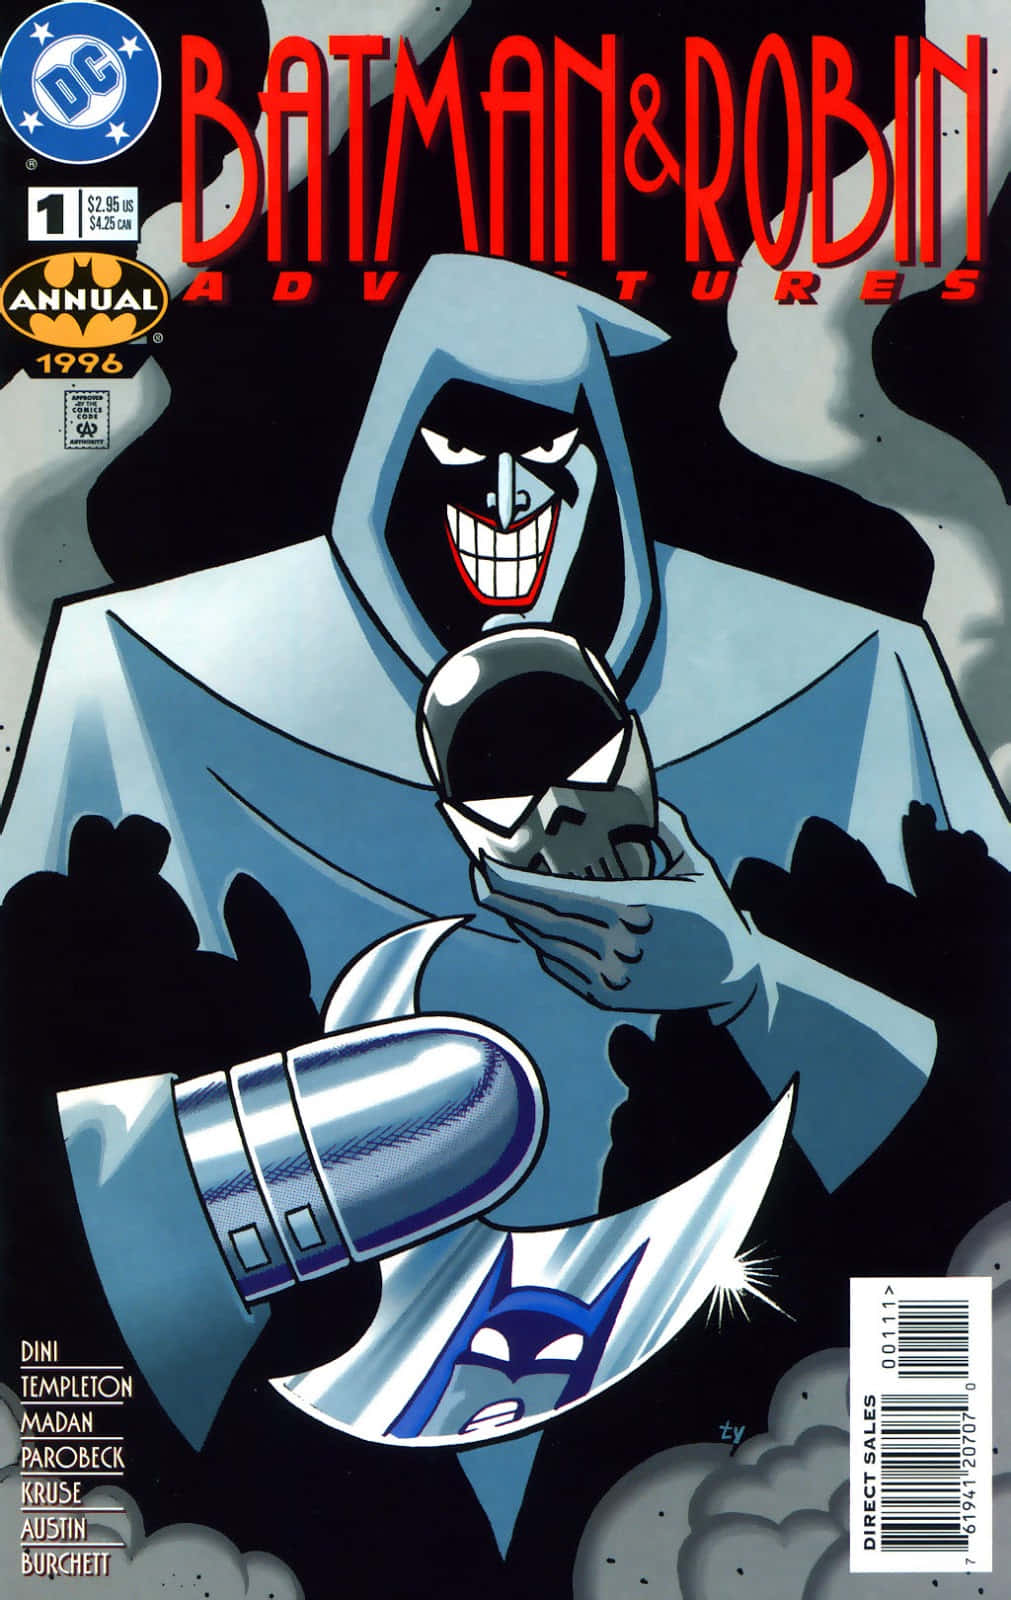 Batman and Phantasm face-off in an intense scene from Batman: Mask of The Phantasm Wallpaper